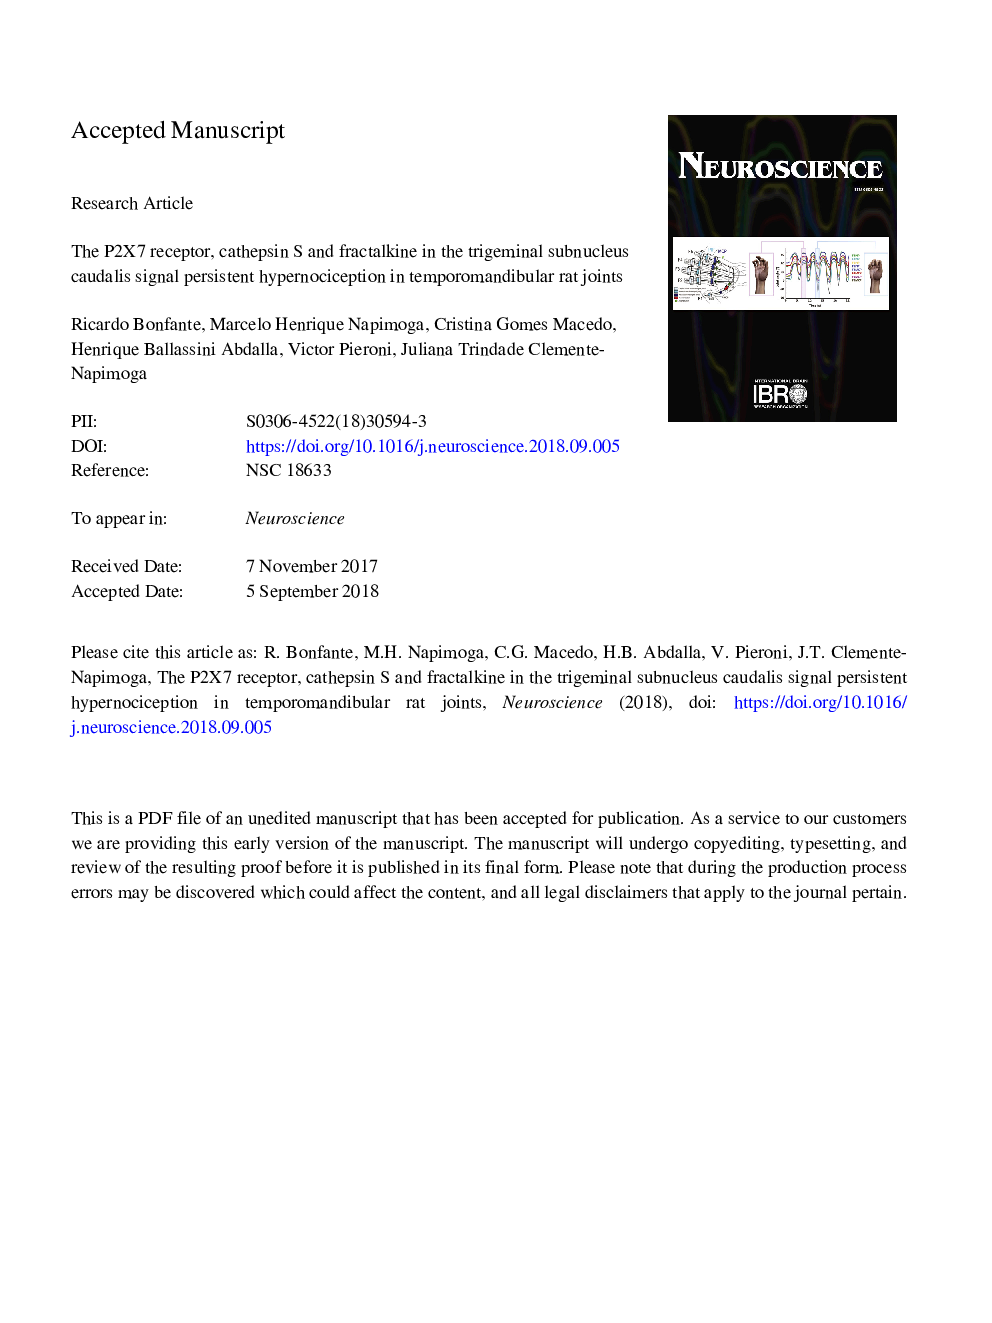 The P2X7 Receptor, Cathepsin S and Fractalkine in the Trigeminal Subnucleus Caudalis Signal Persistent Hypernociception in Temporomandibular Rat Joints